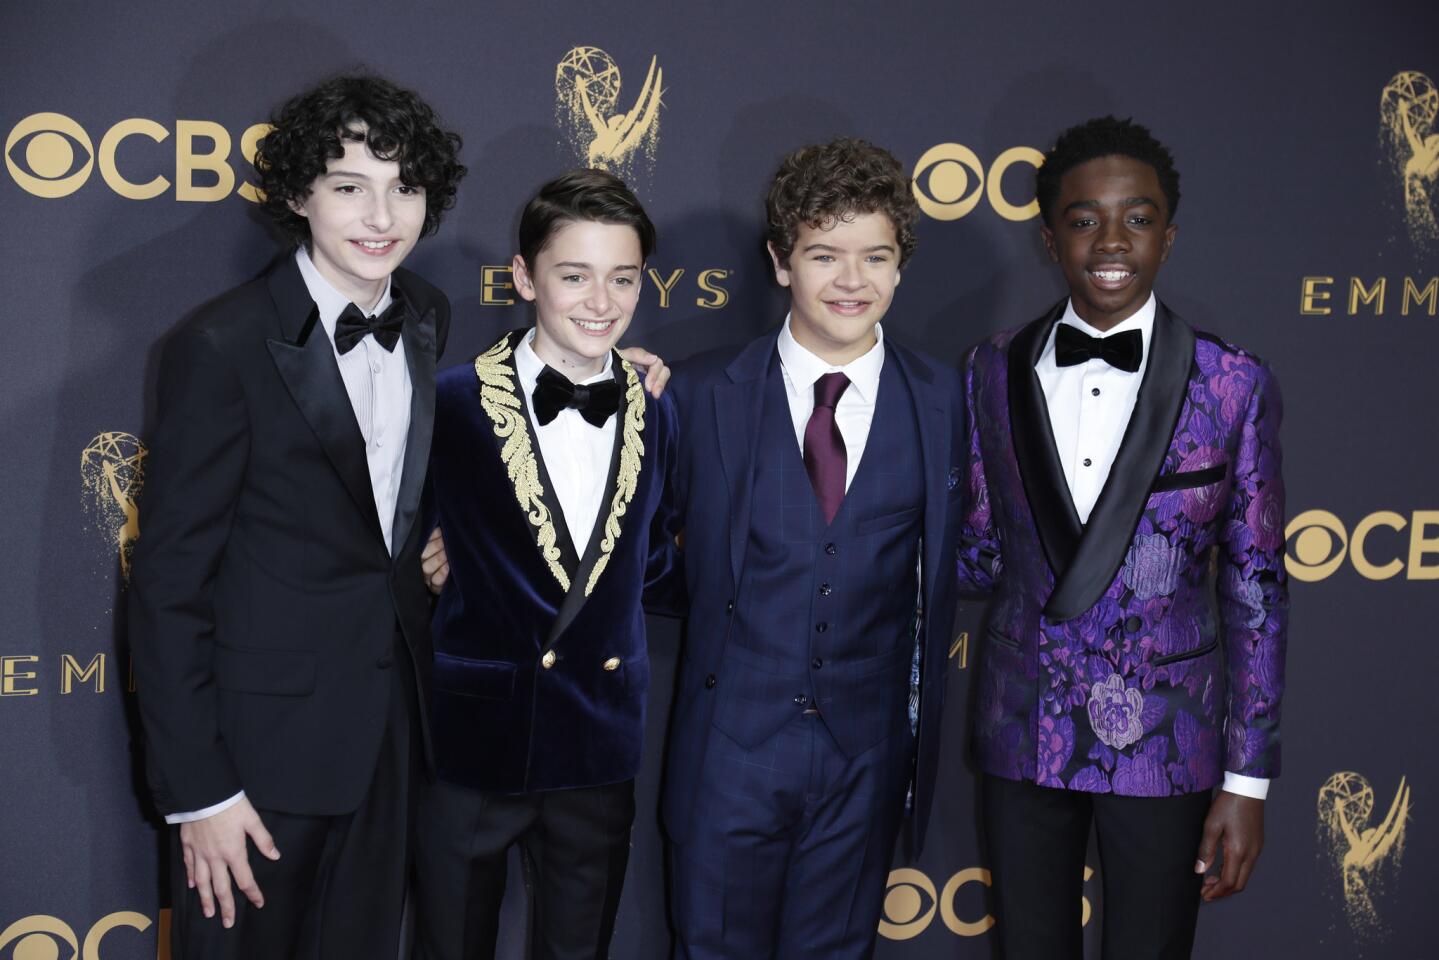 2017 Emmy Awards: Best dressed